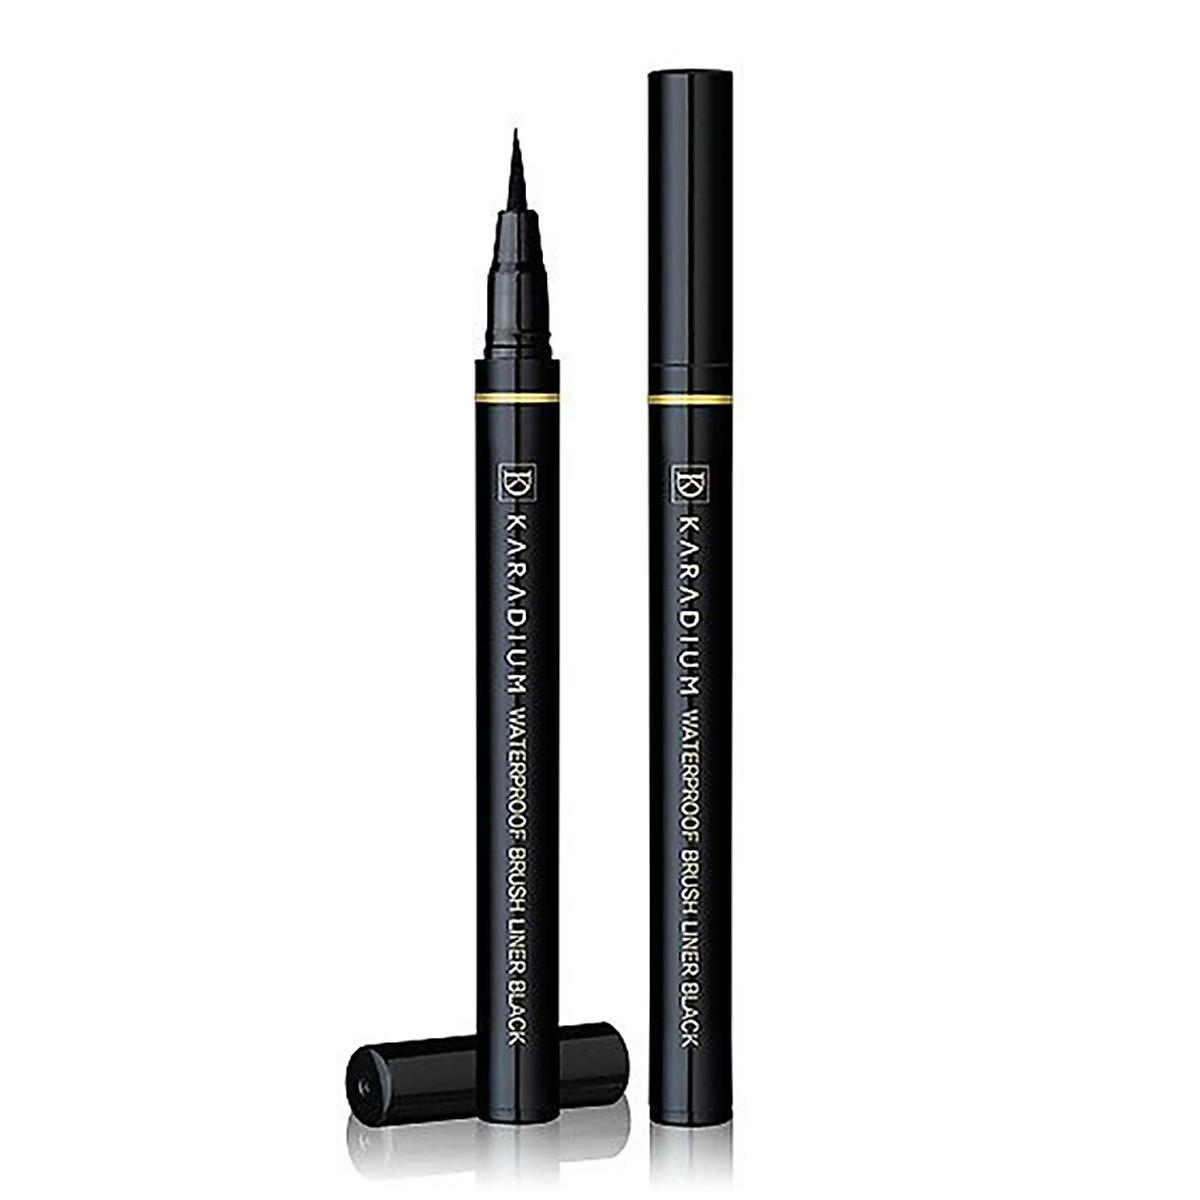 So Sánh Giá Bút Dạ Kẻ Mắt Karadium Waterproof Eyeliner Pen Black